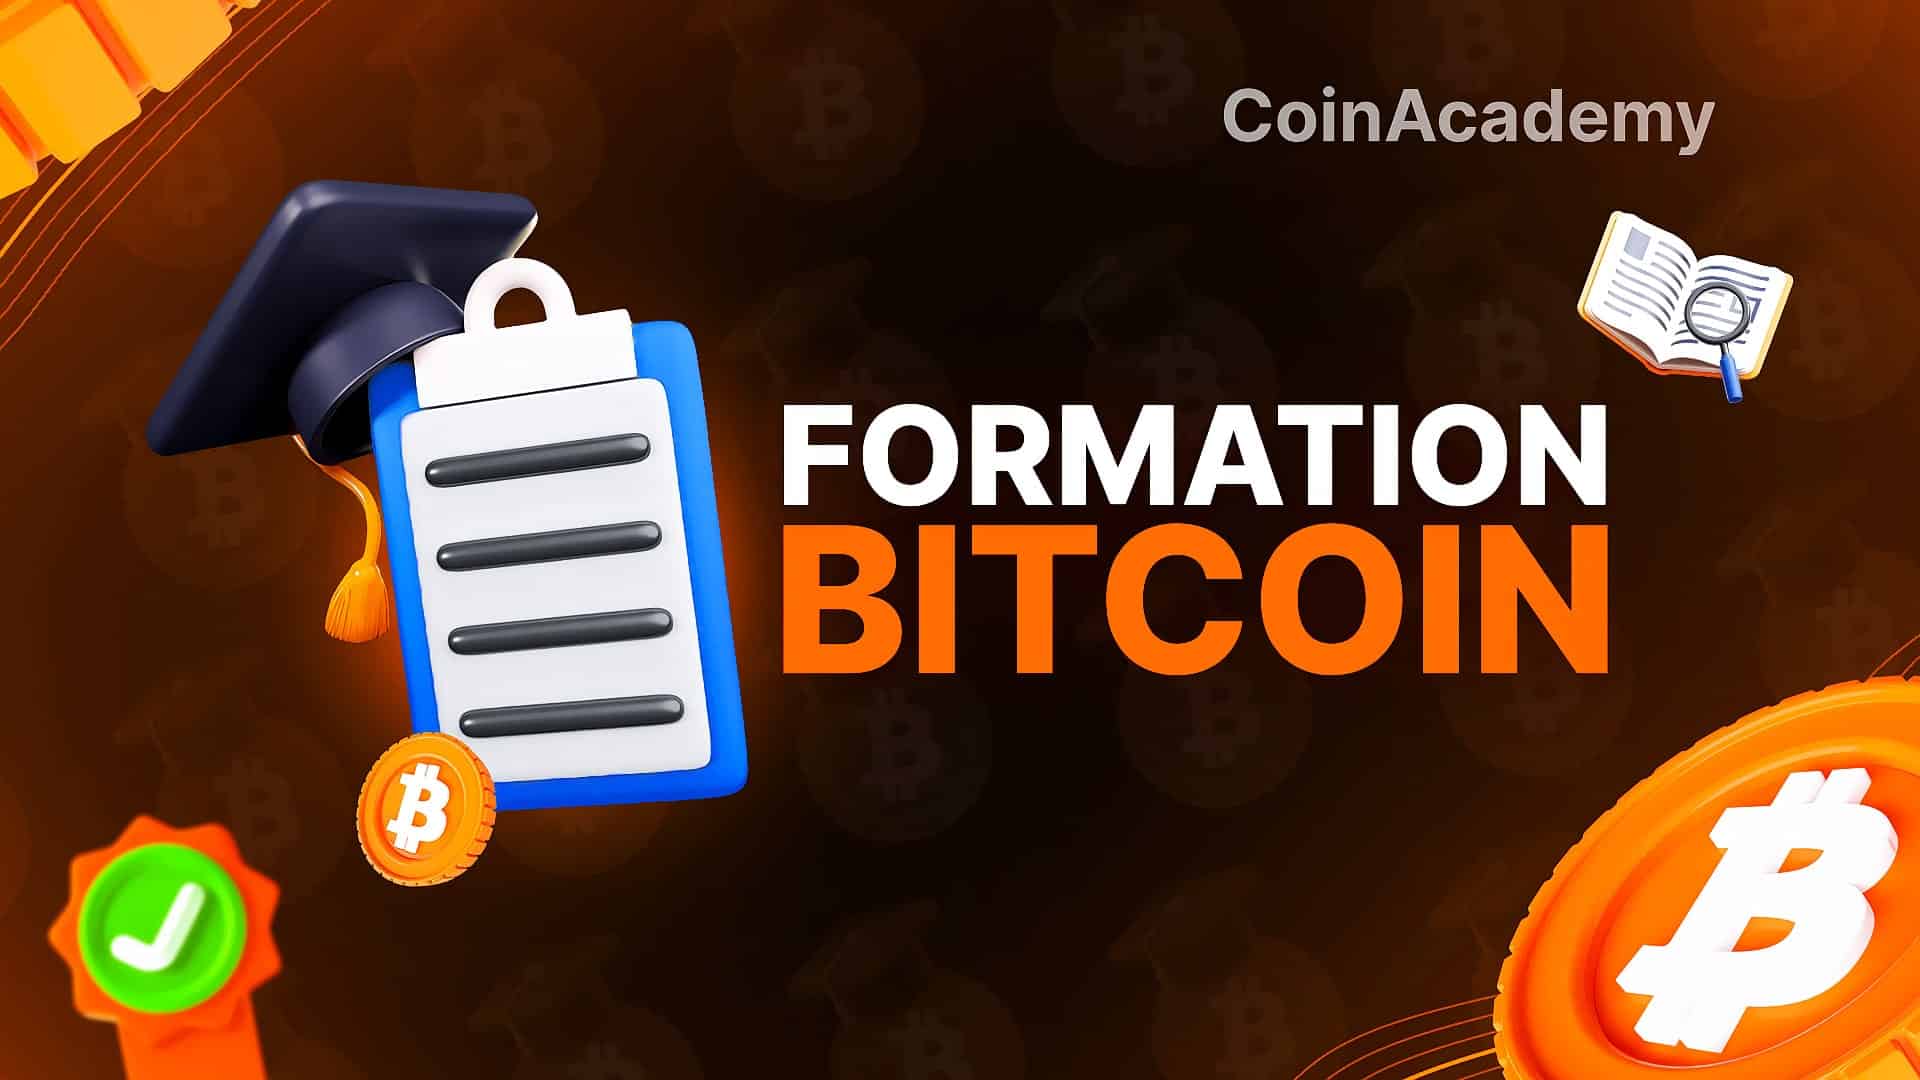 Formation Bitcoin CoinAcademy